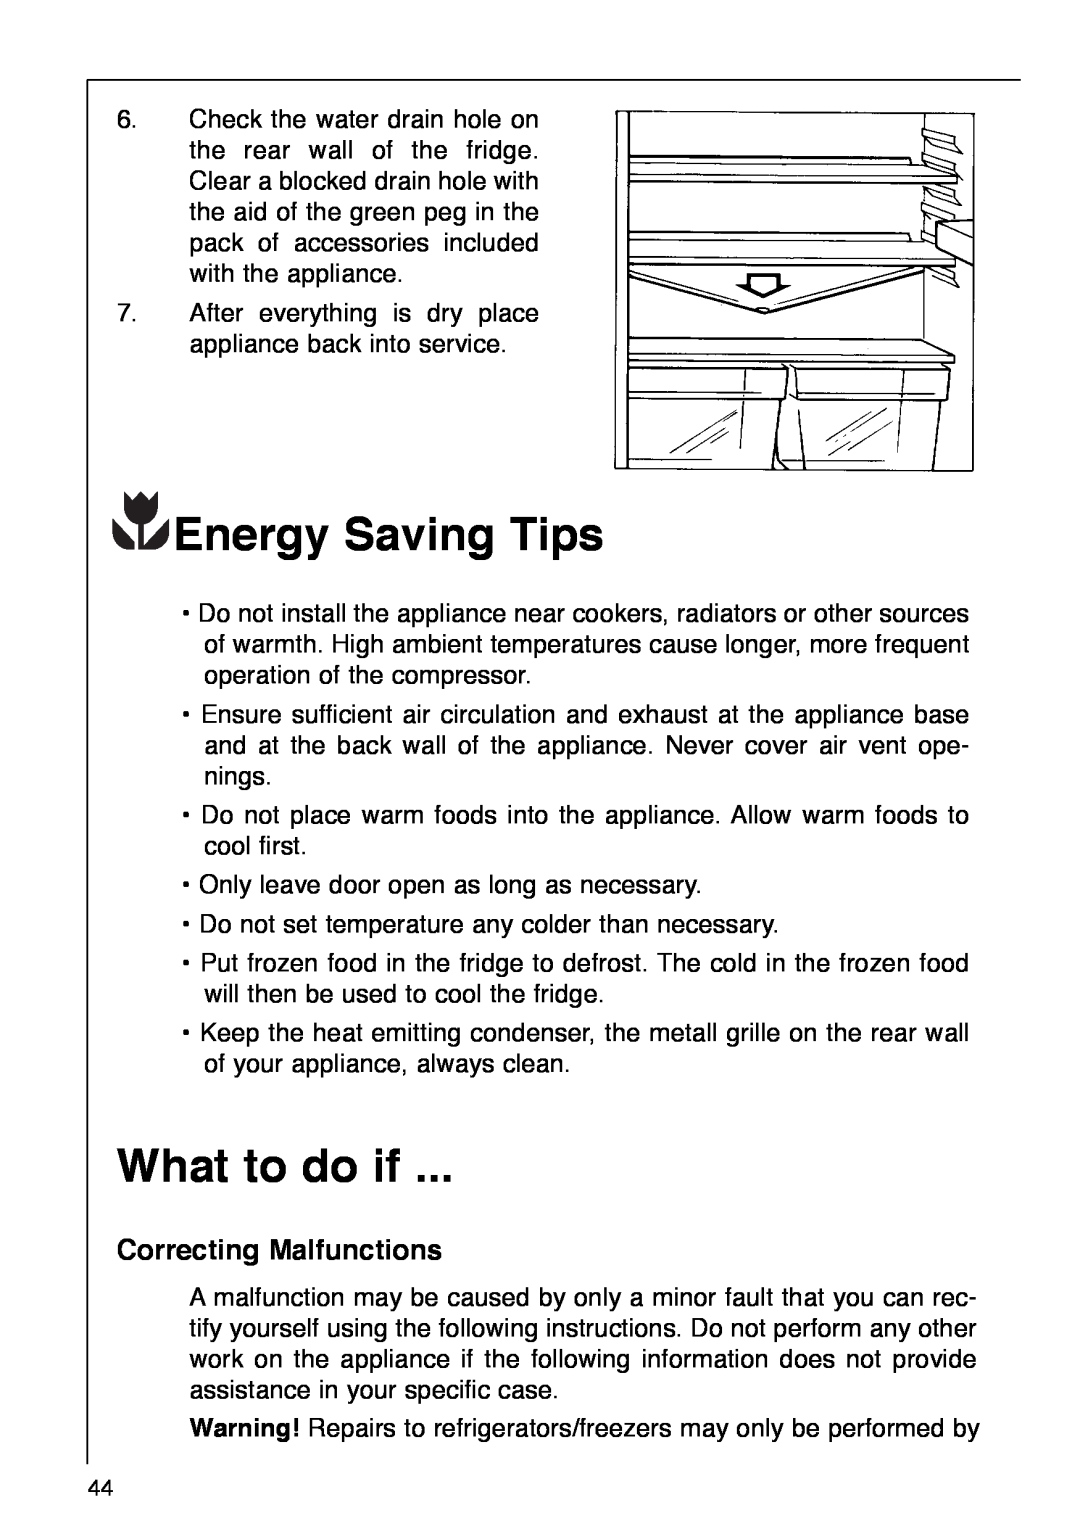 AEG 290-6I installation instructions Energy Saving Tips, What to do if, Correcting Malfunctions 